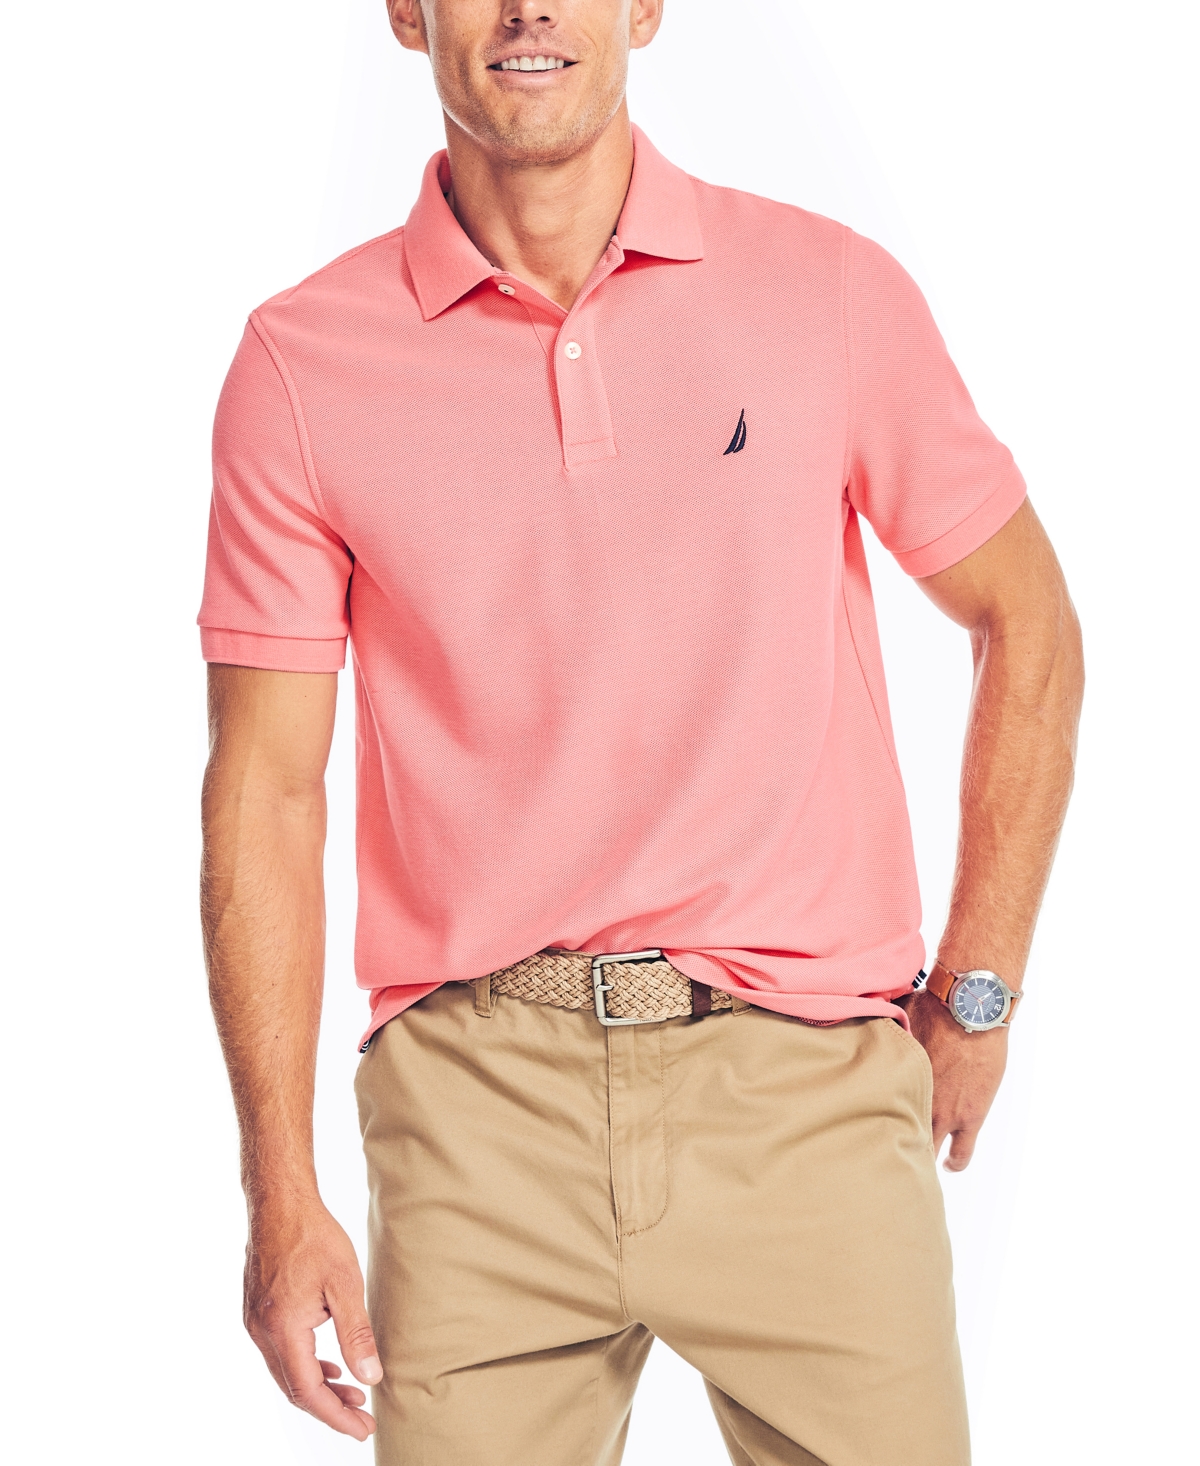 NAUTICA Mens Performance Deck Shirt Pink Classic Fit Button Down Cotton  Blend Polo XS 